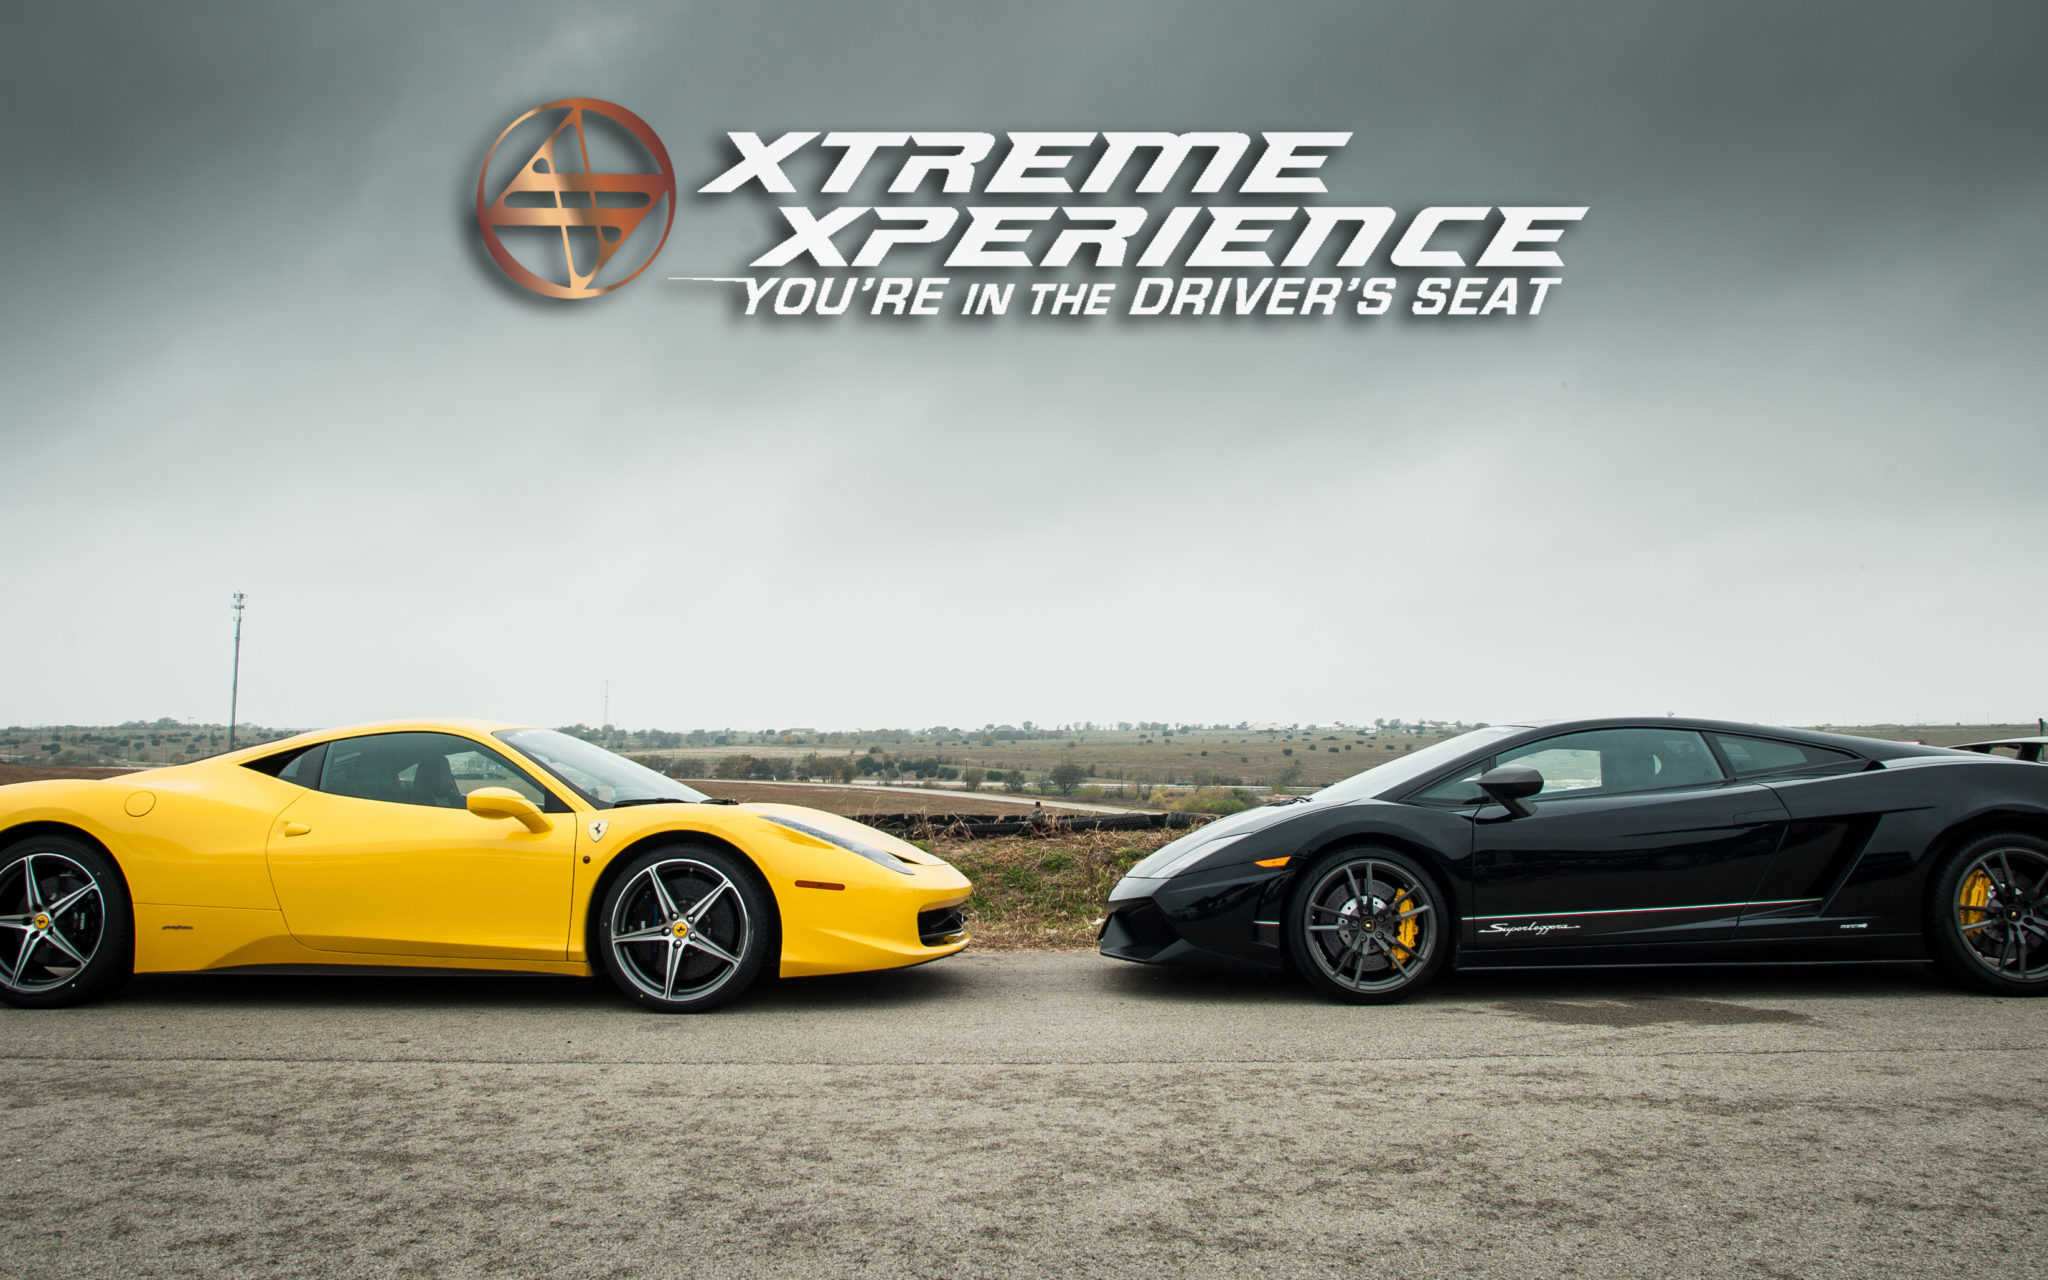 Ferrari Vs. Lamborghini Desktop wallpaper by Xtreme Xperience